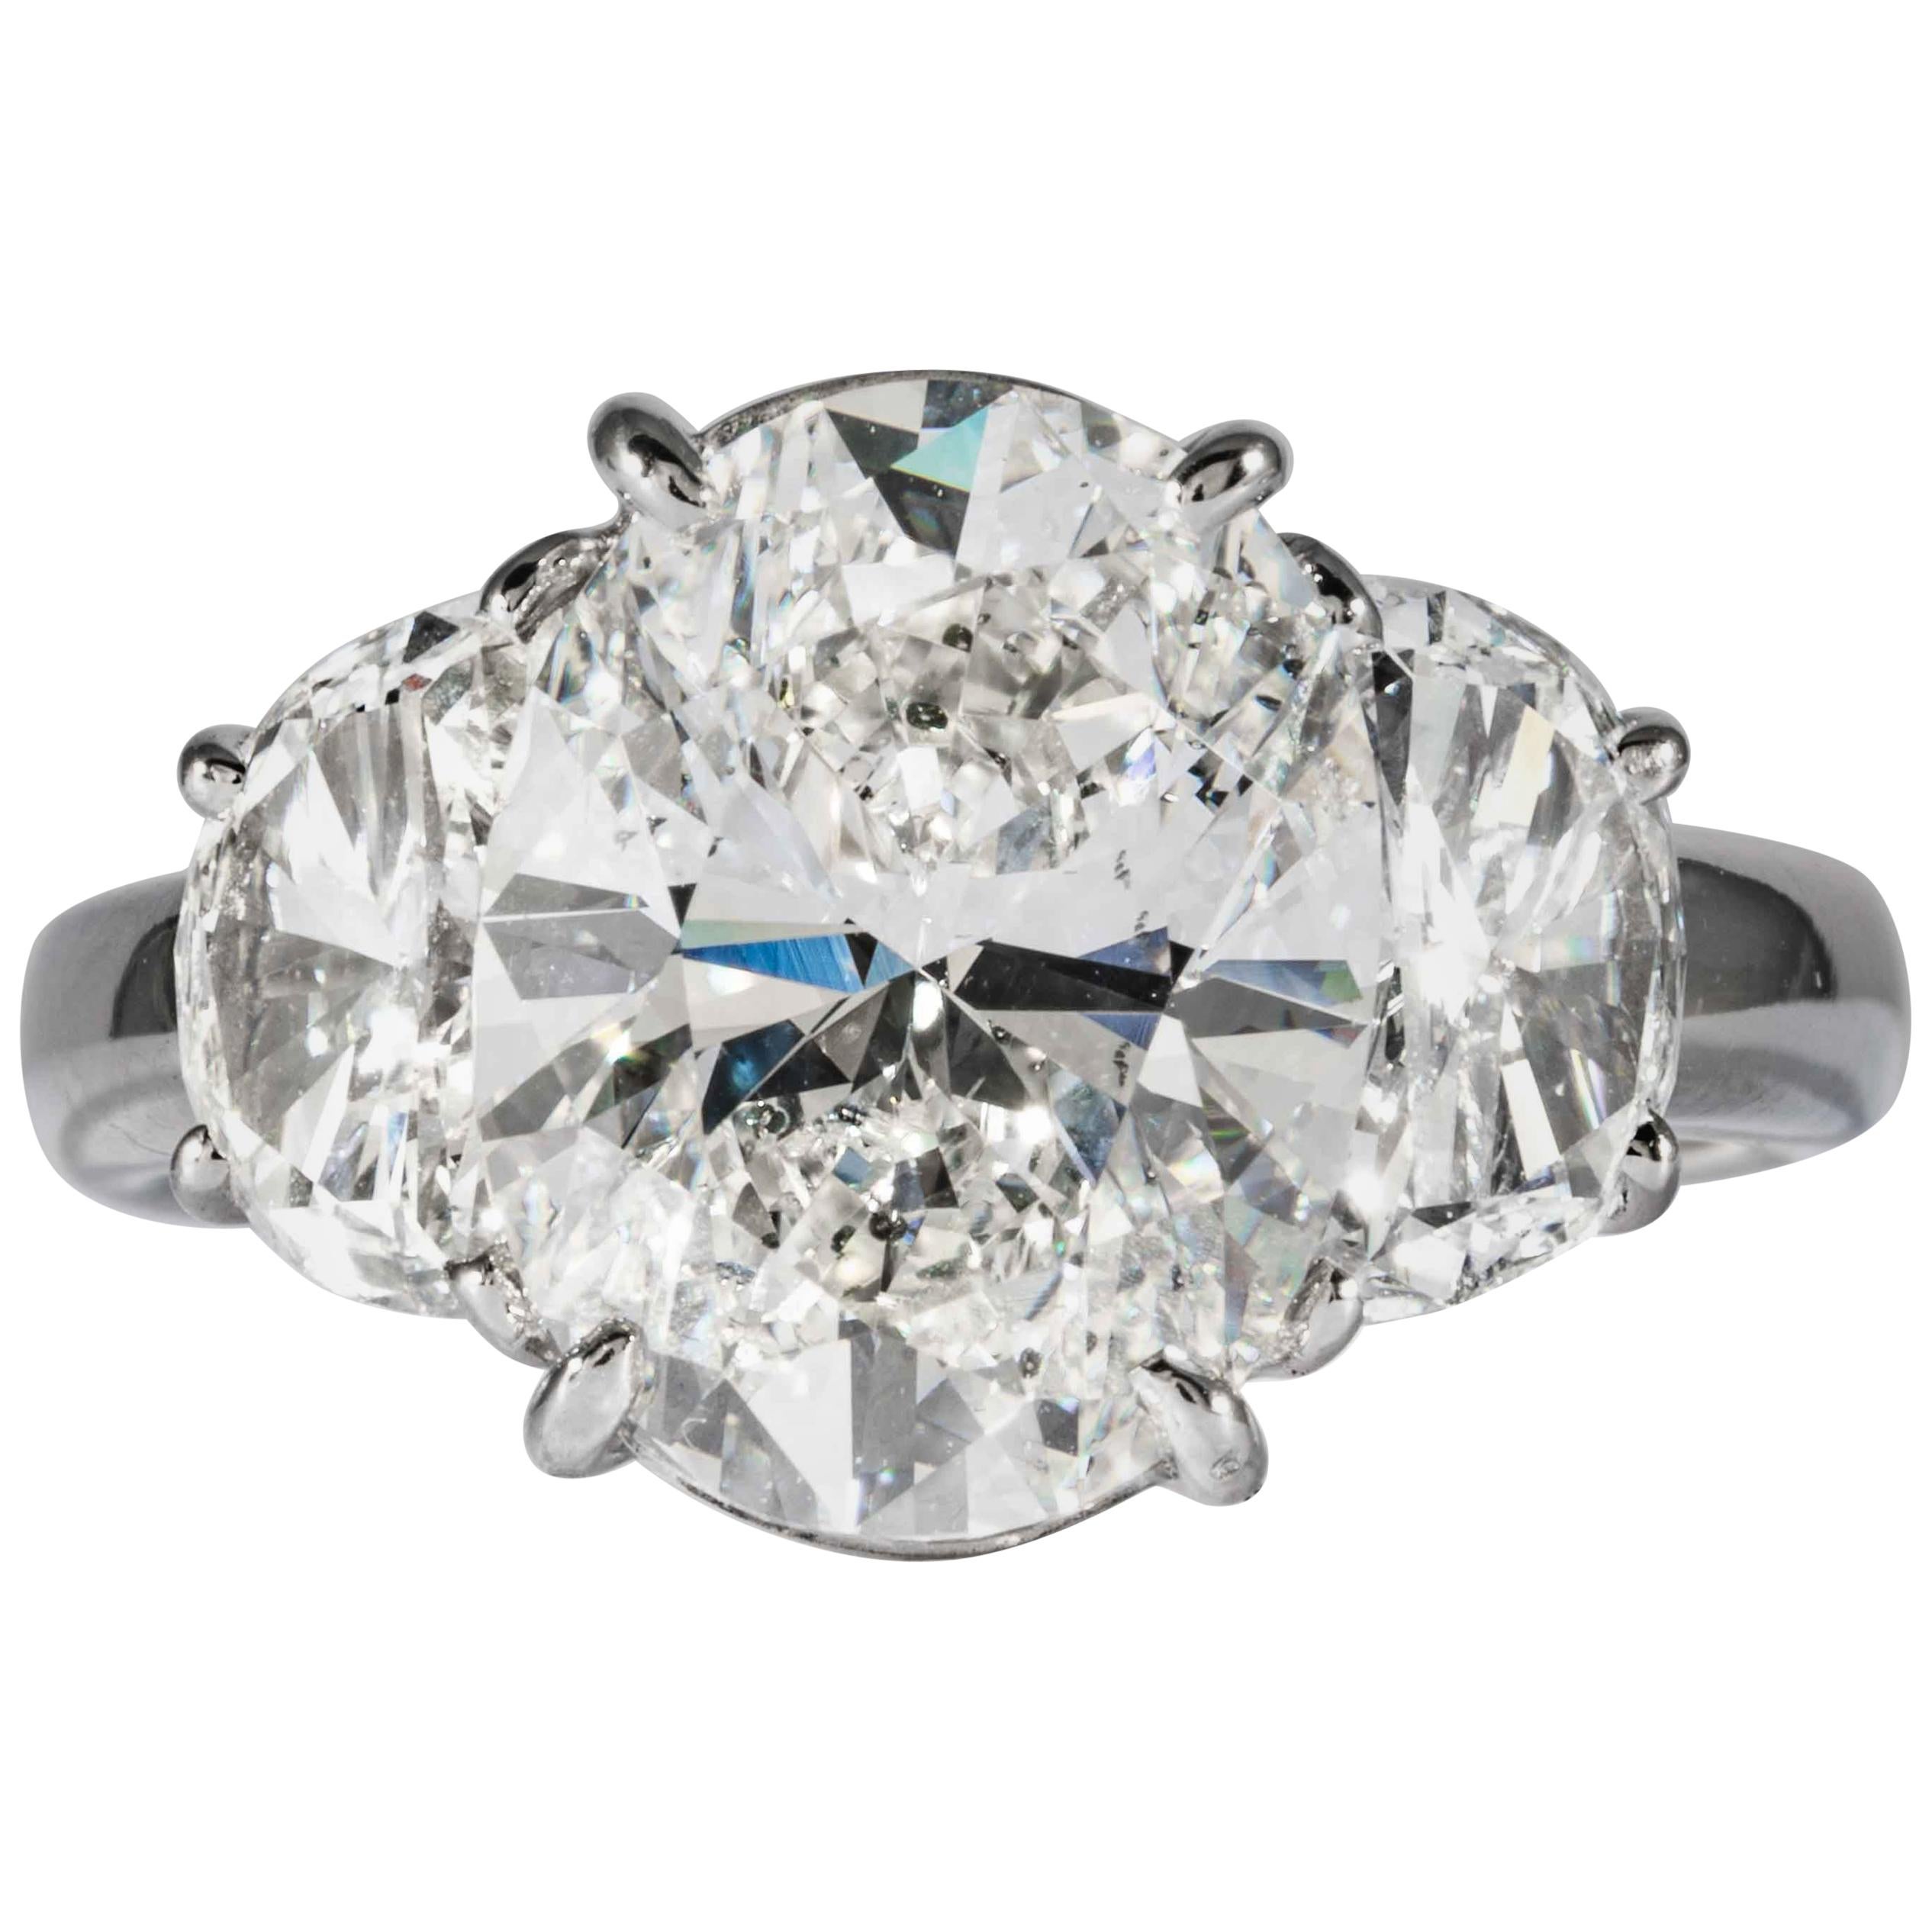 Shreve, Crump & Low GIA Certified 4.12 Carat G SI1 Oval Cut Diamond 3-Stone Ring